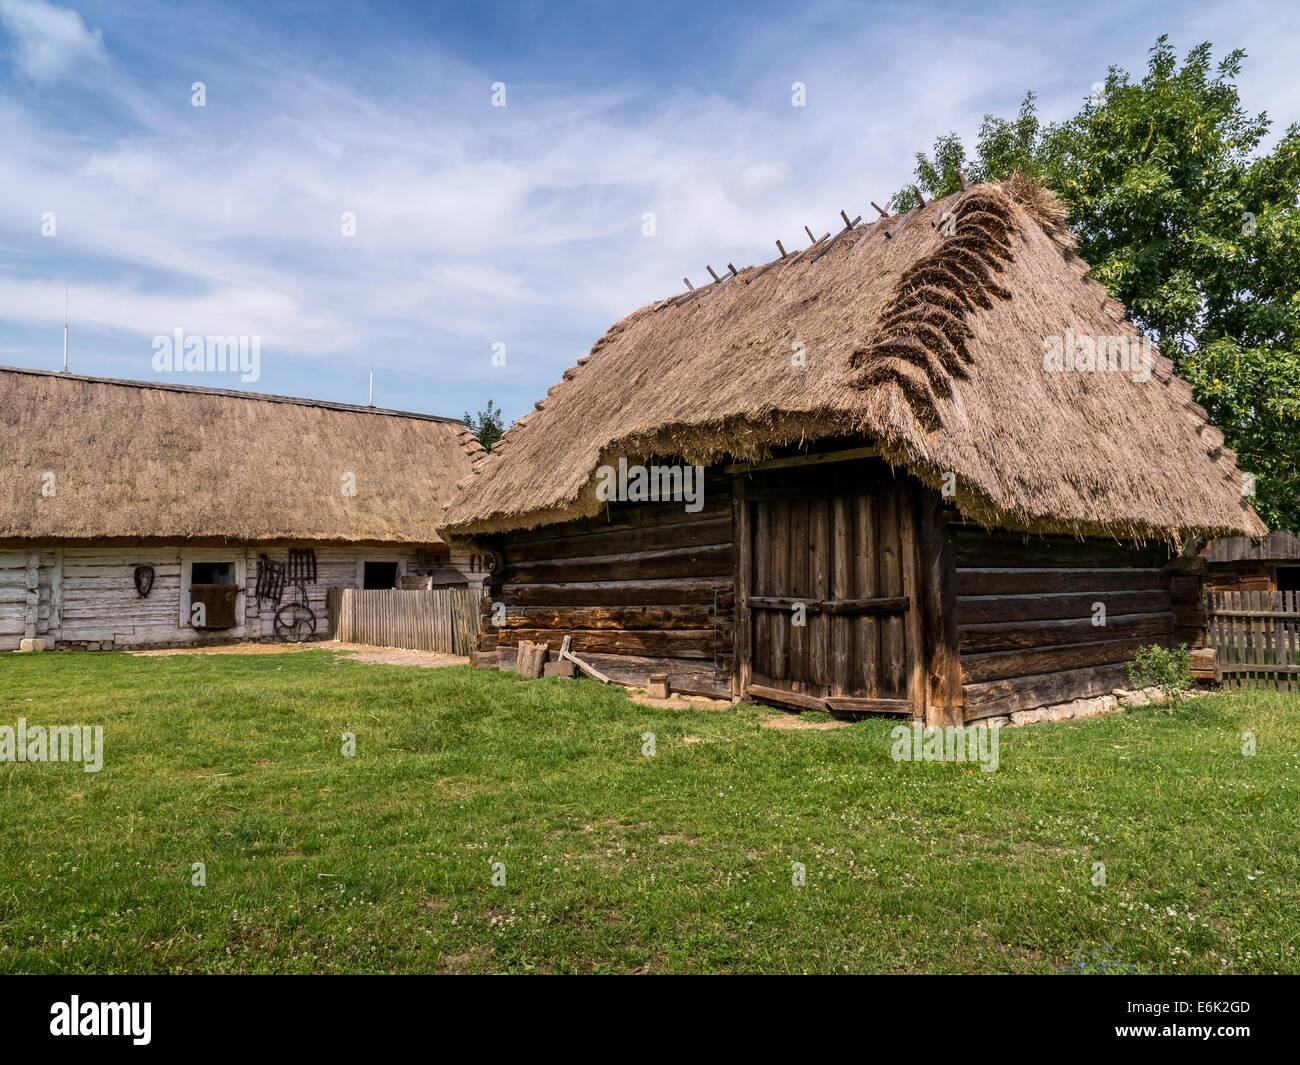 Típica alquería polaco de estilo antiguo con techos de paja. Foto de stock